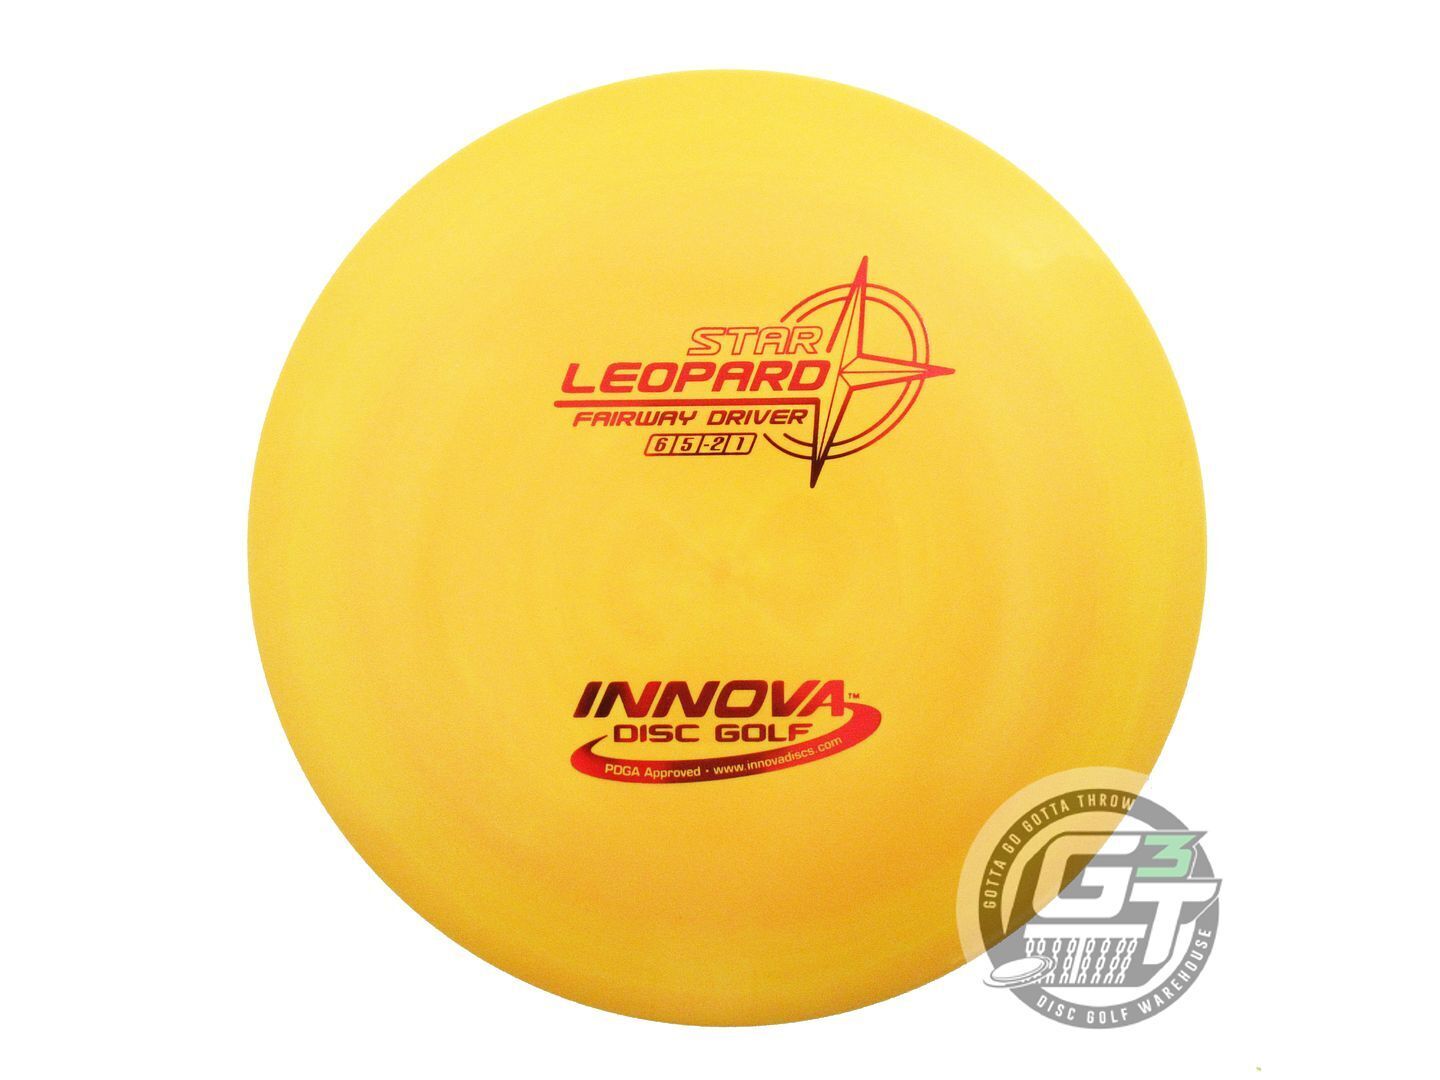 Innova Star Leopard Fairway Driver Golf Disc (Individually Listed)